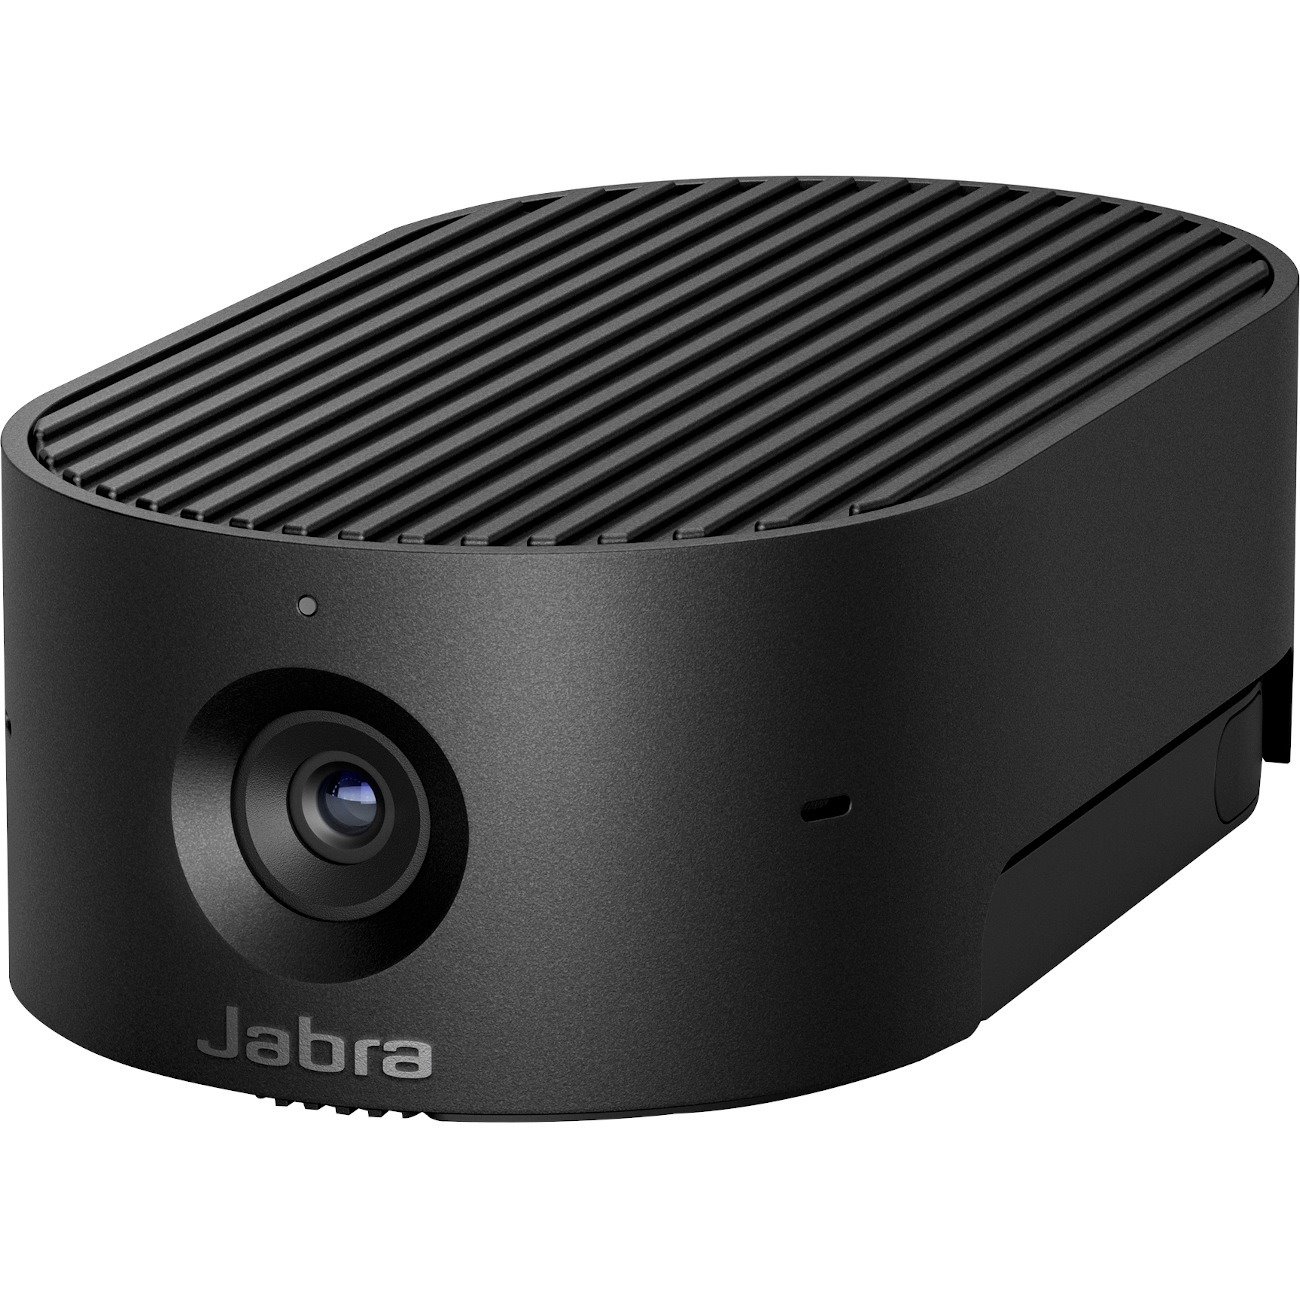 Jabra PanaCast 20 Video Conferencing Camera - USB 3.0 Type C